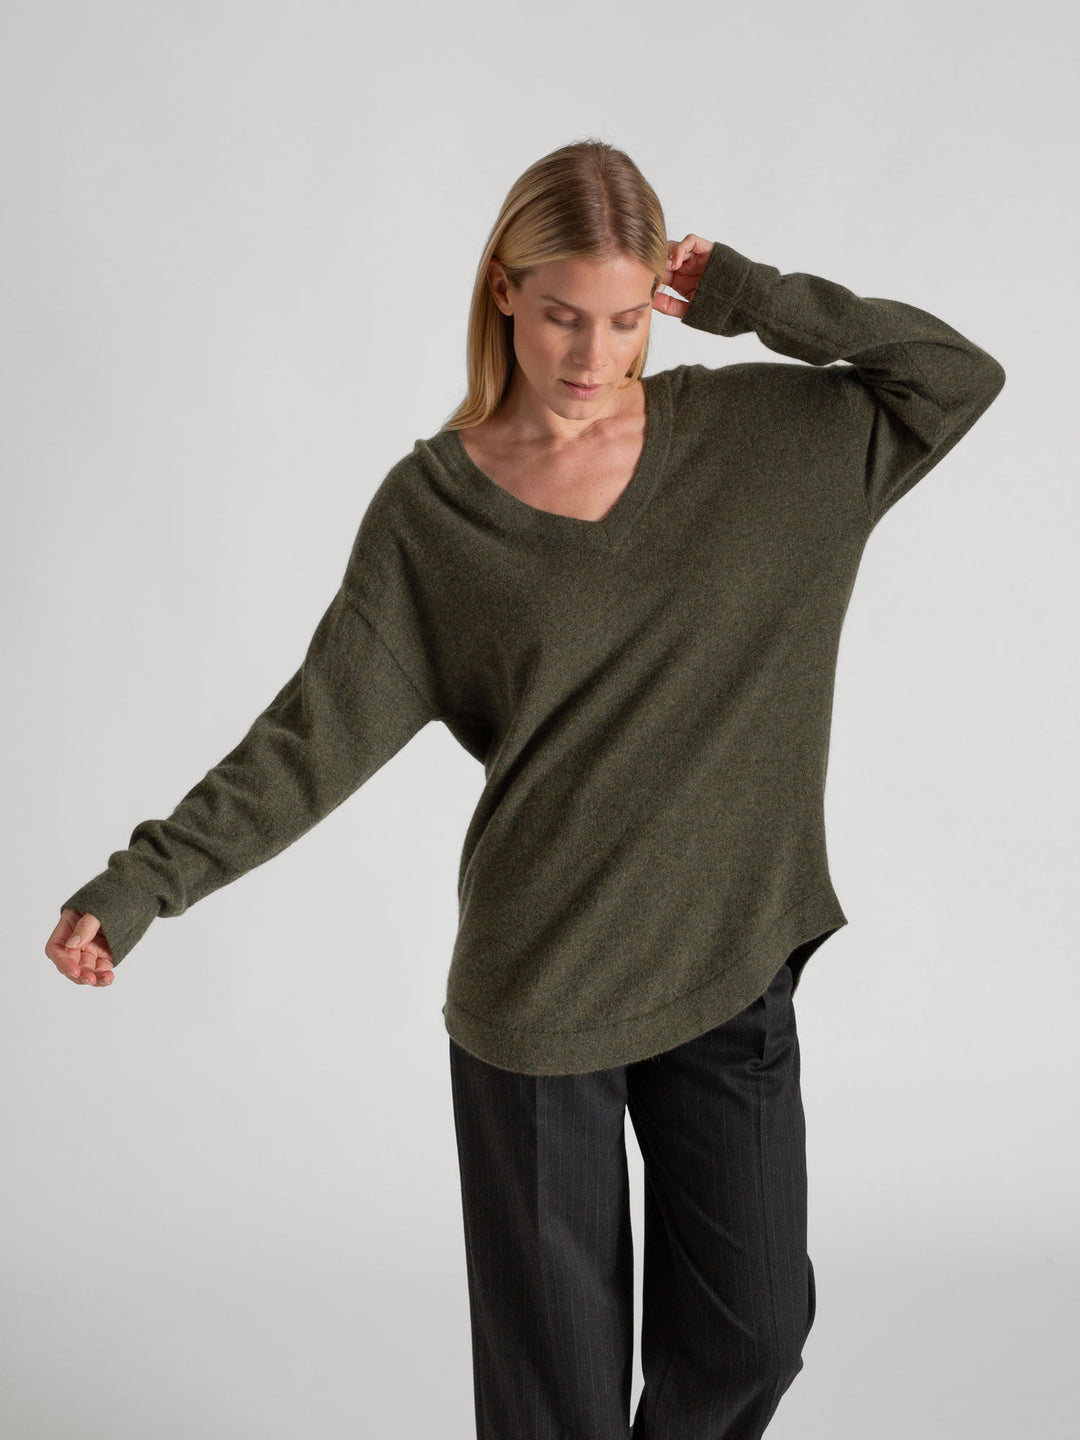 Cashmere sweater v-neck "Alva" in 100% pure cashmere. Scandinavian design by Kashmina.